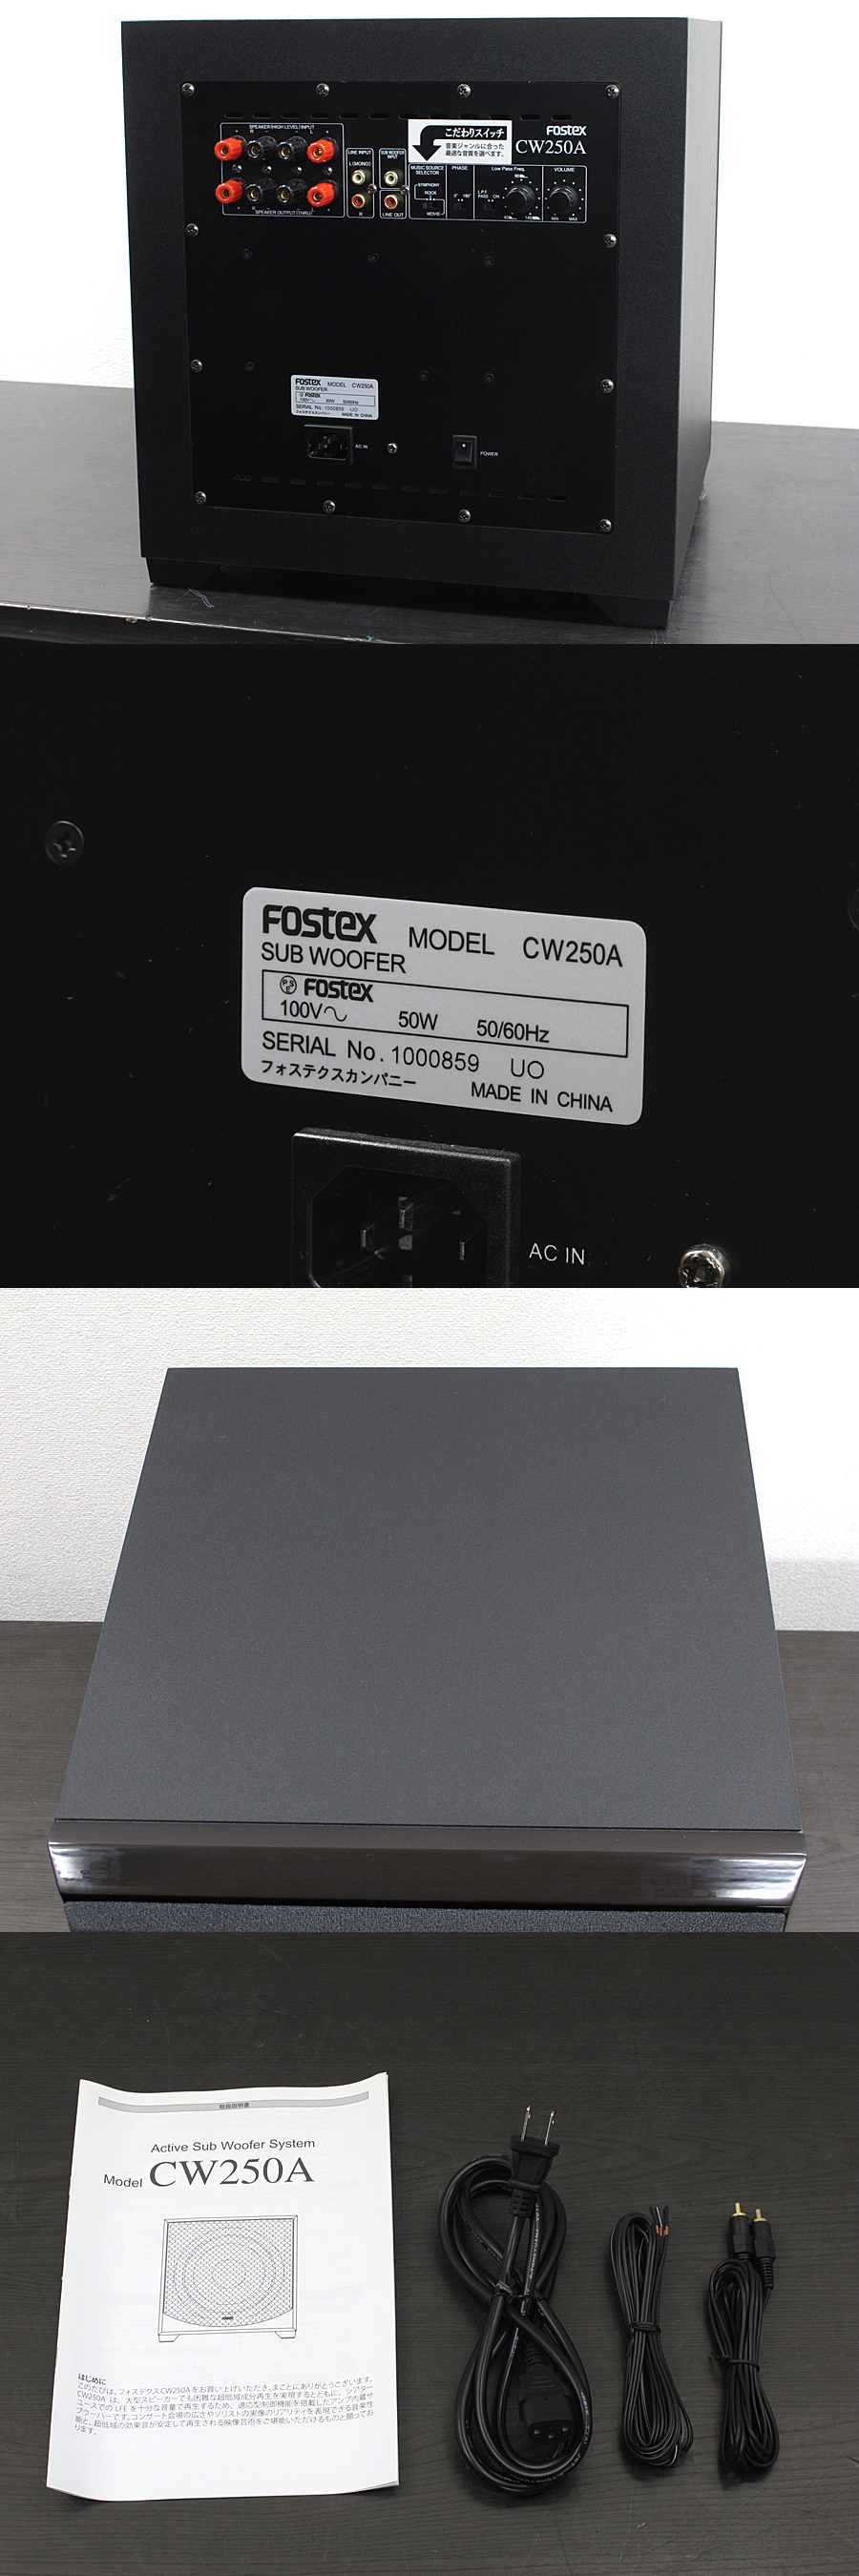 FOSTEX CW250A アクティブサブウーファー 説明書付き - スピーカー 